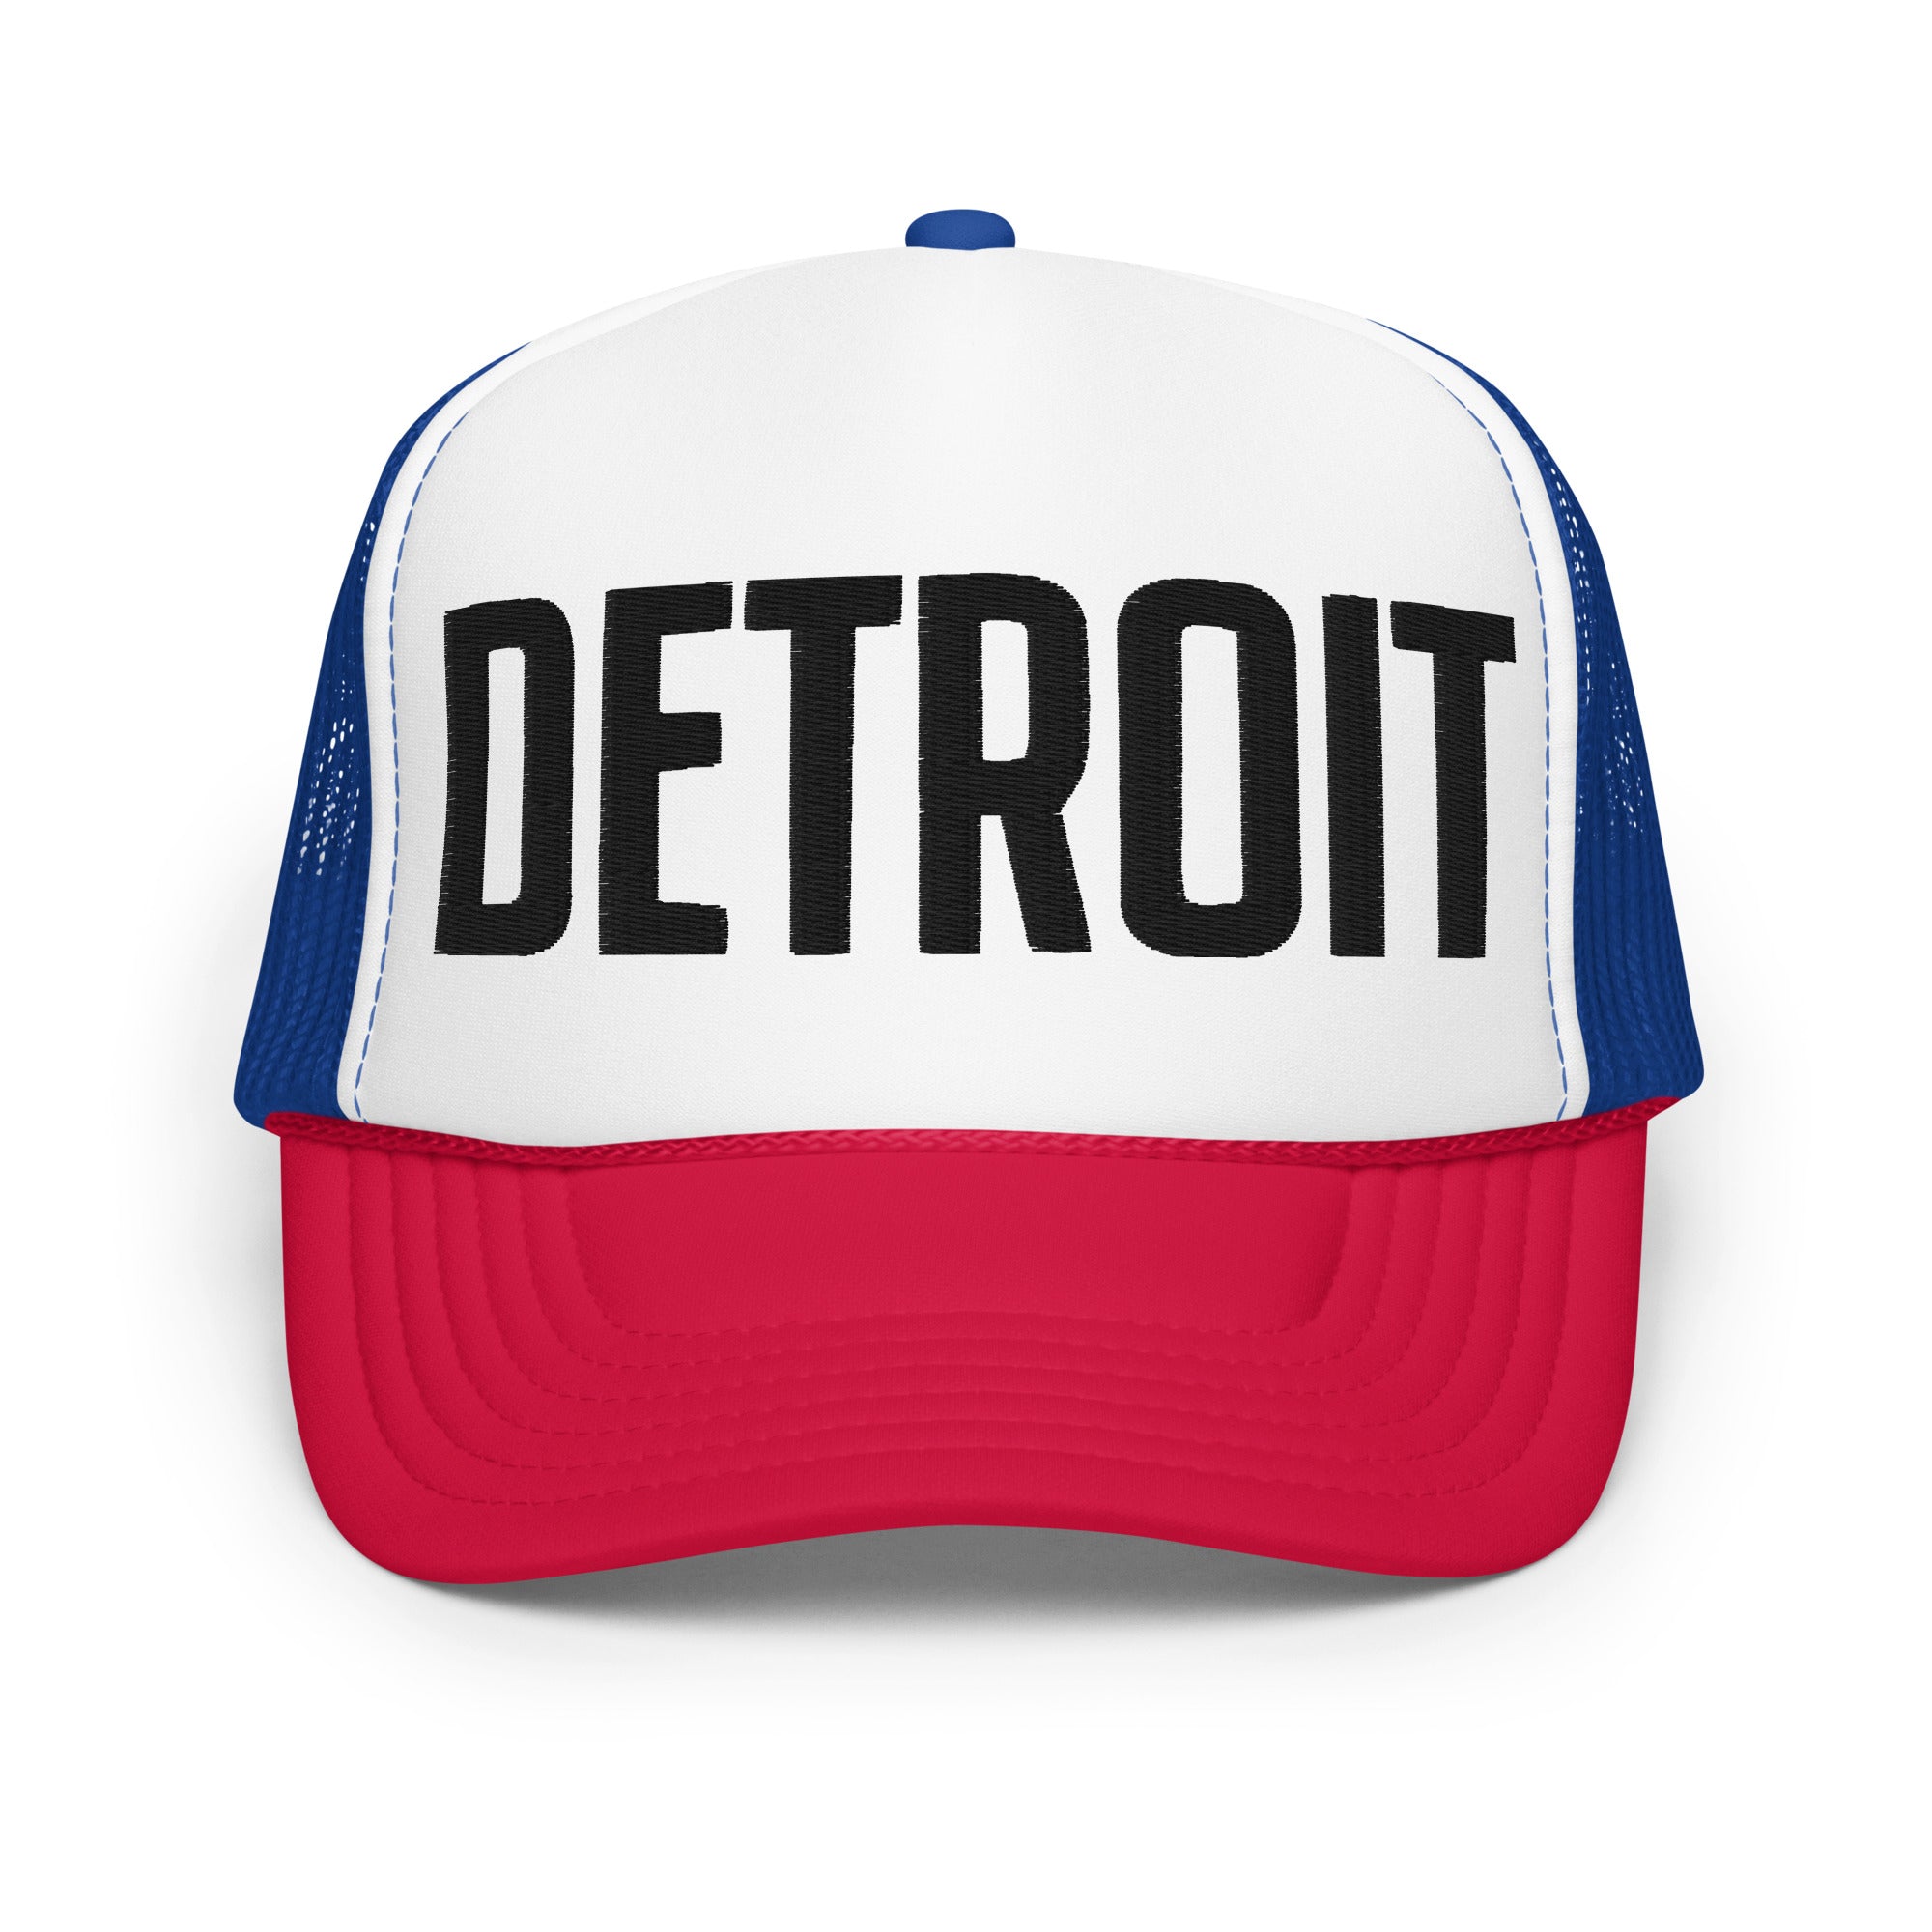 Detroit Foam Trucker Hat - Black, Red, Blue & White - Embroidered  Default Title  